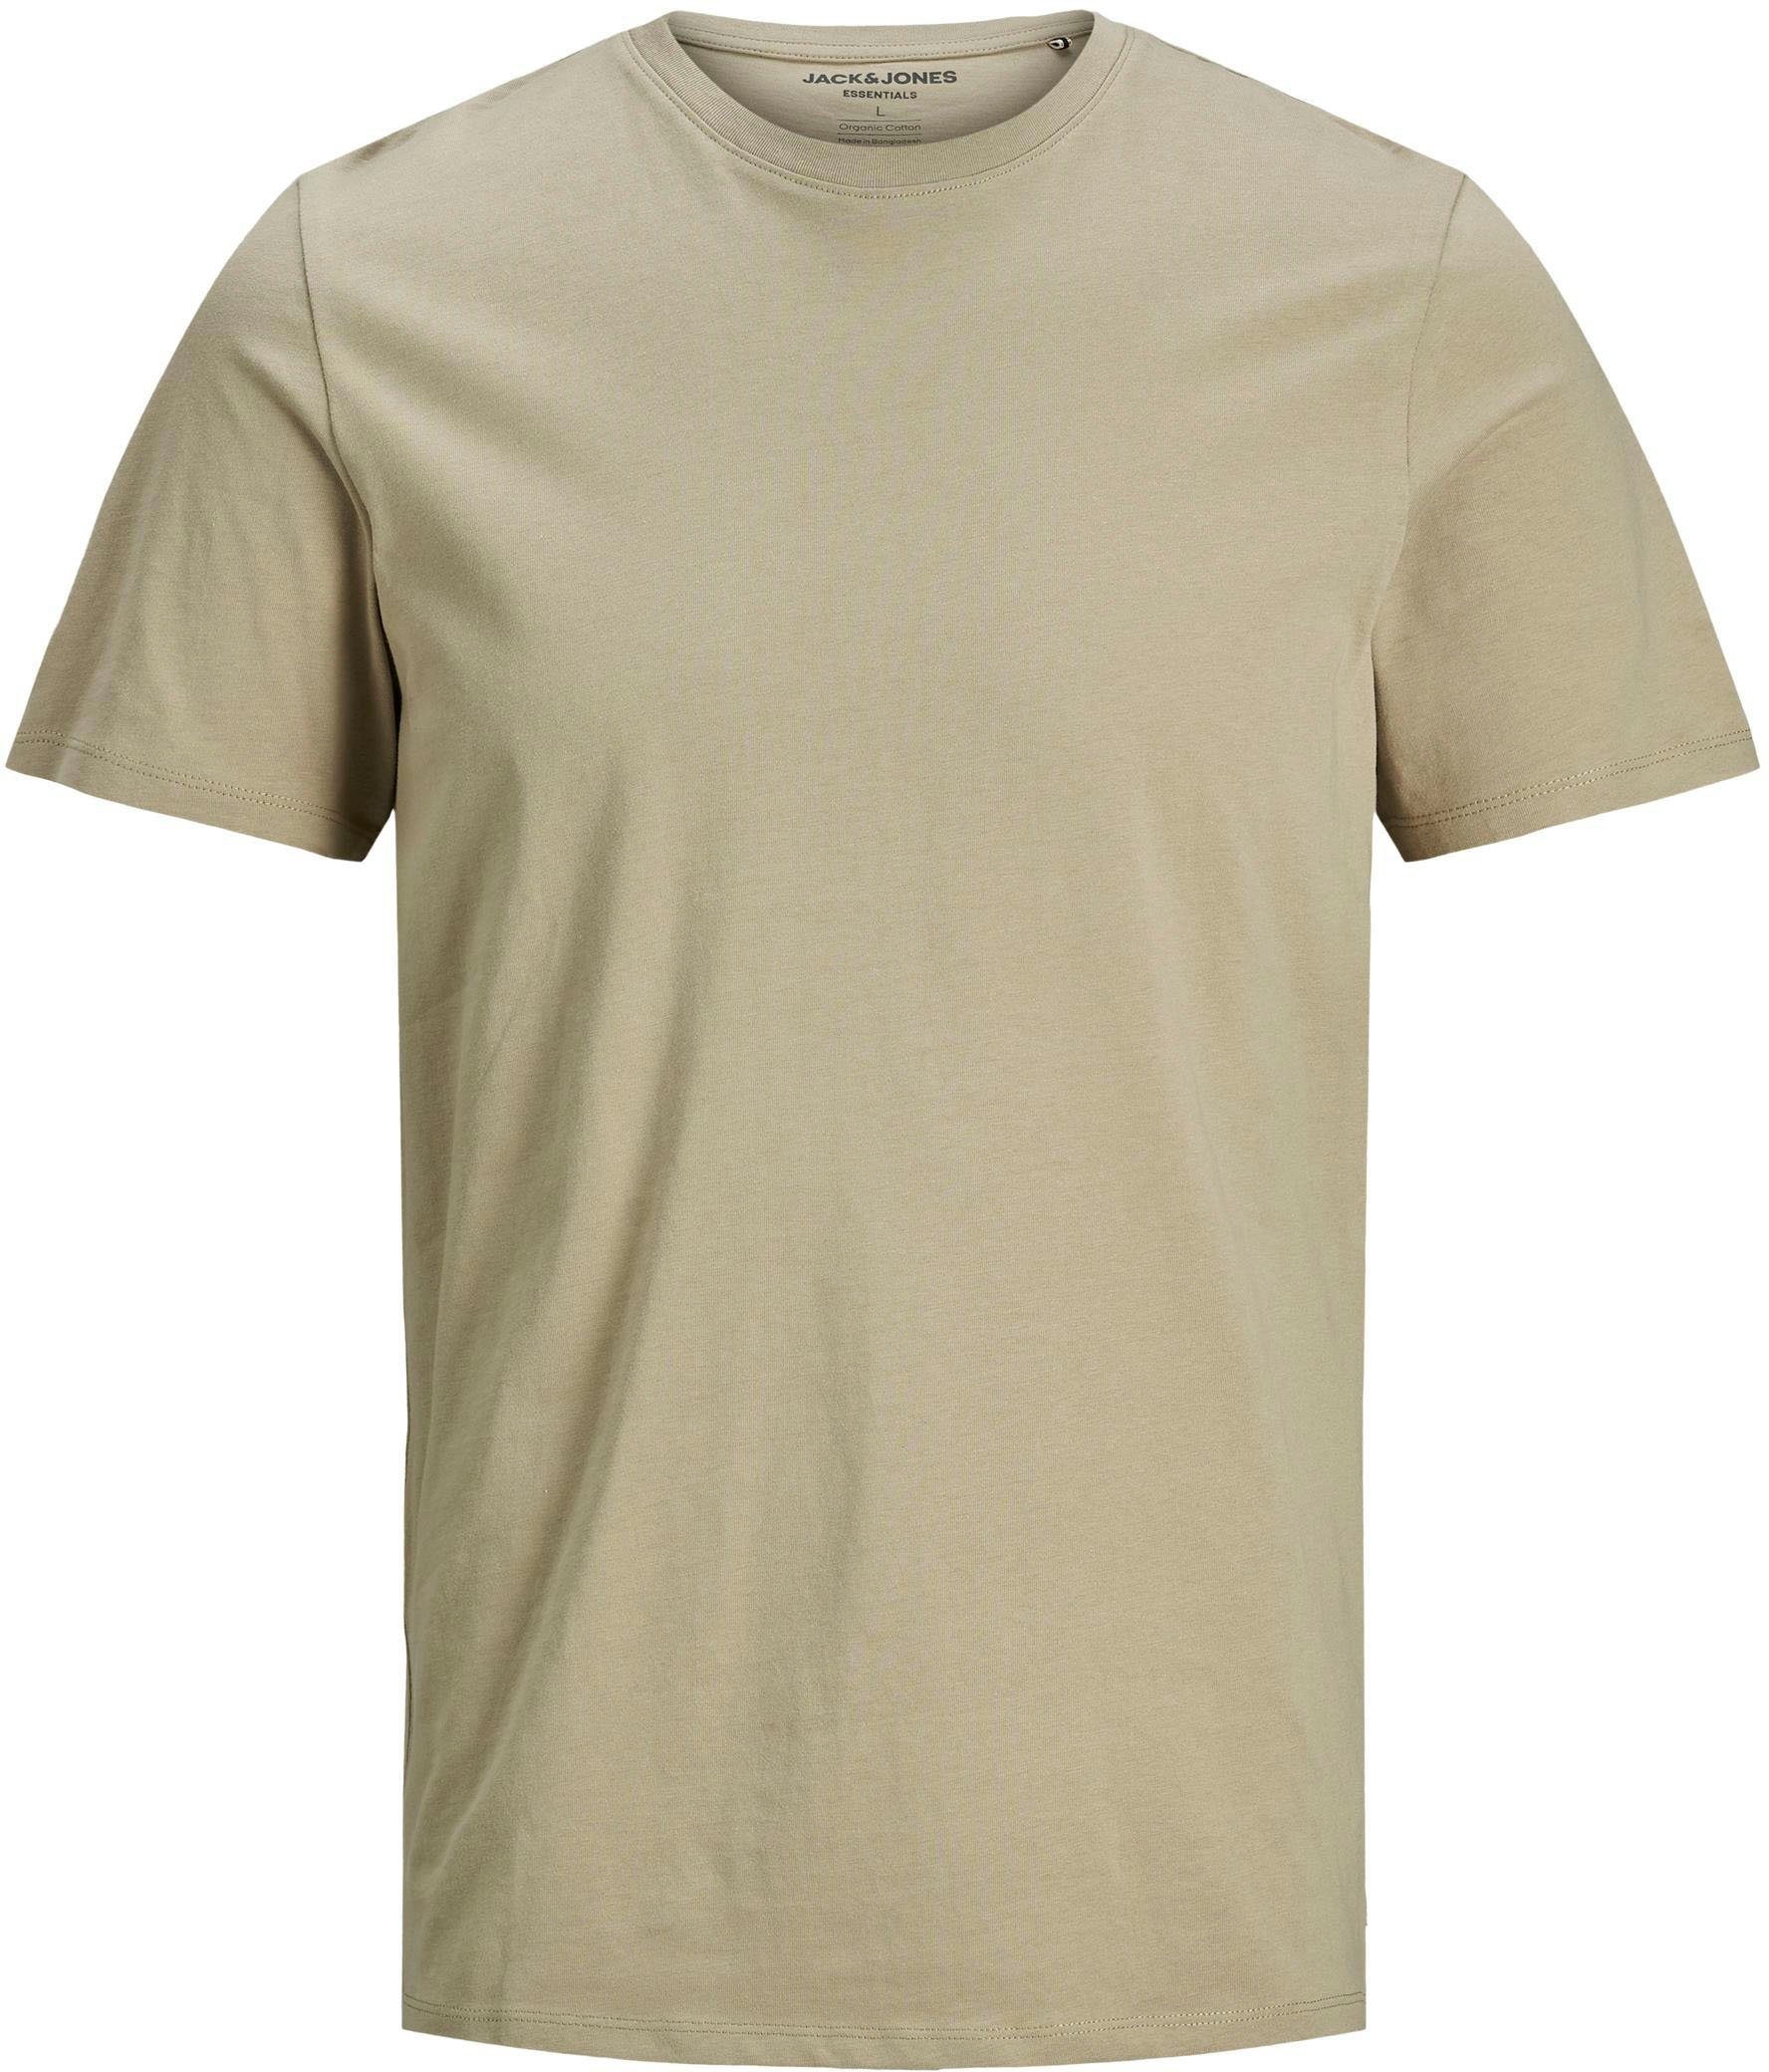 hellbeige BASIC ORGANIC T-Shirt & Jack TEE Jones